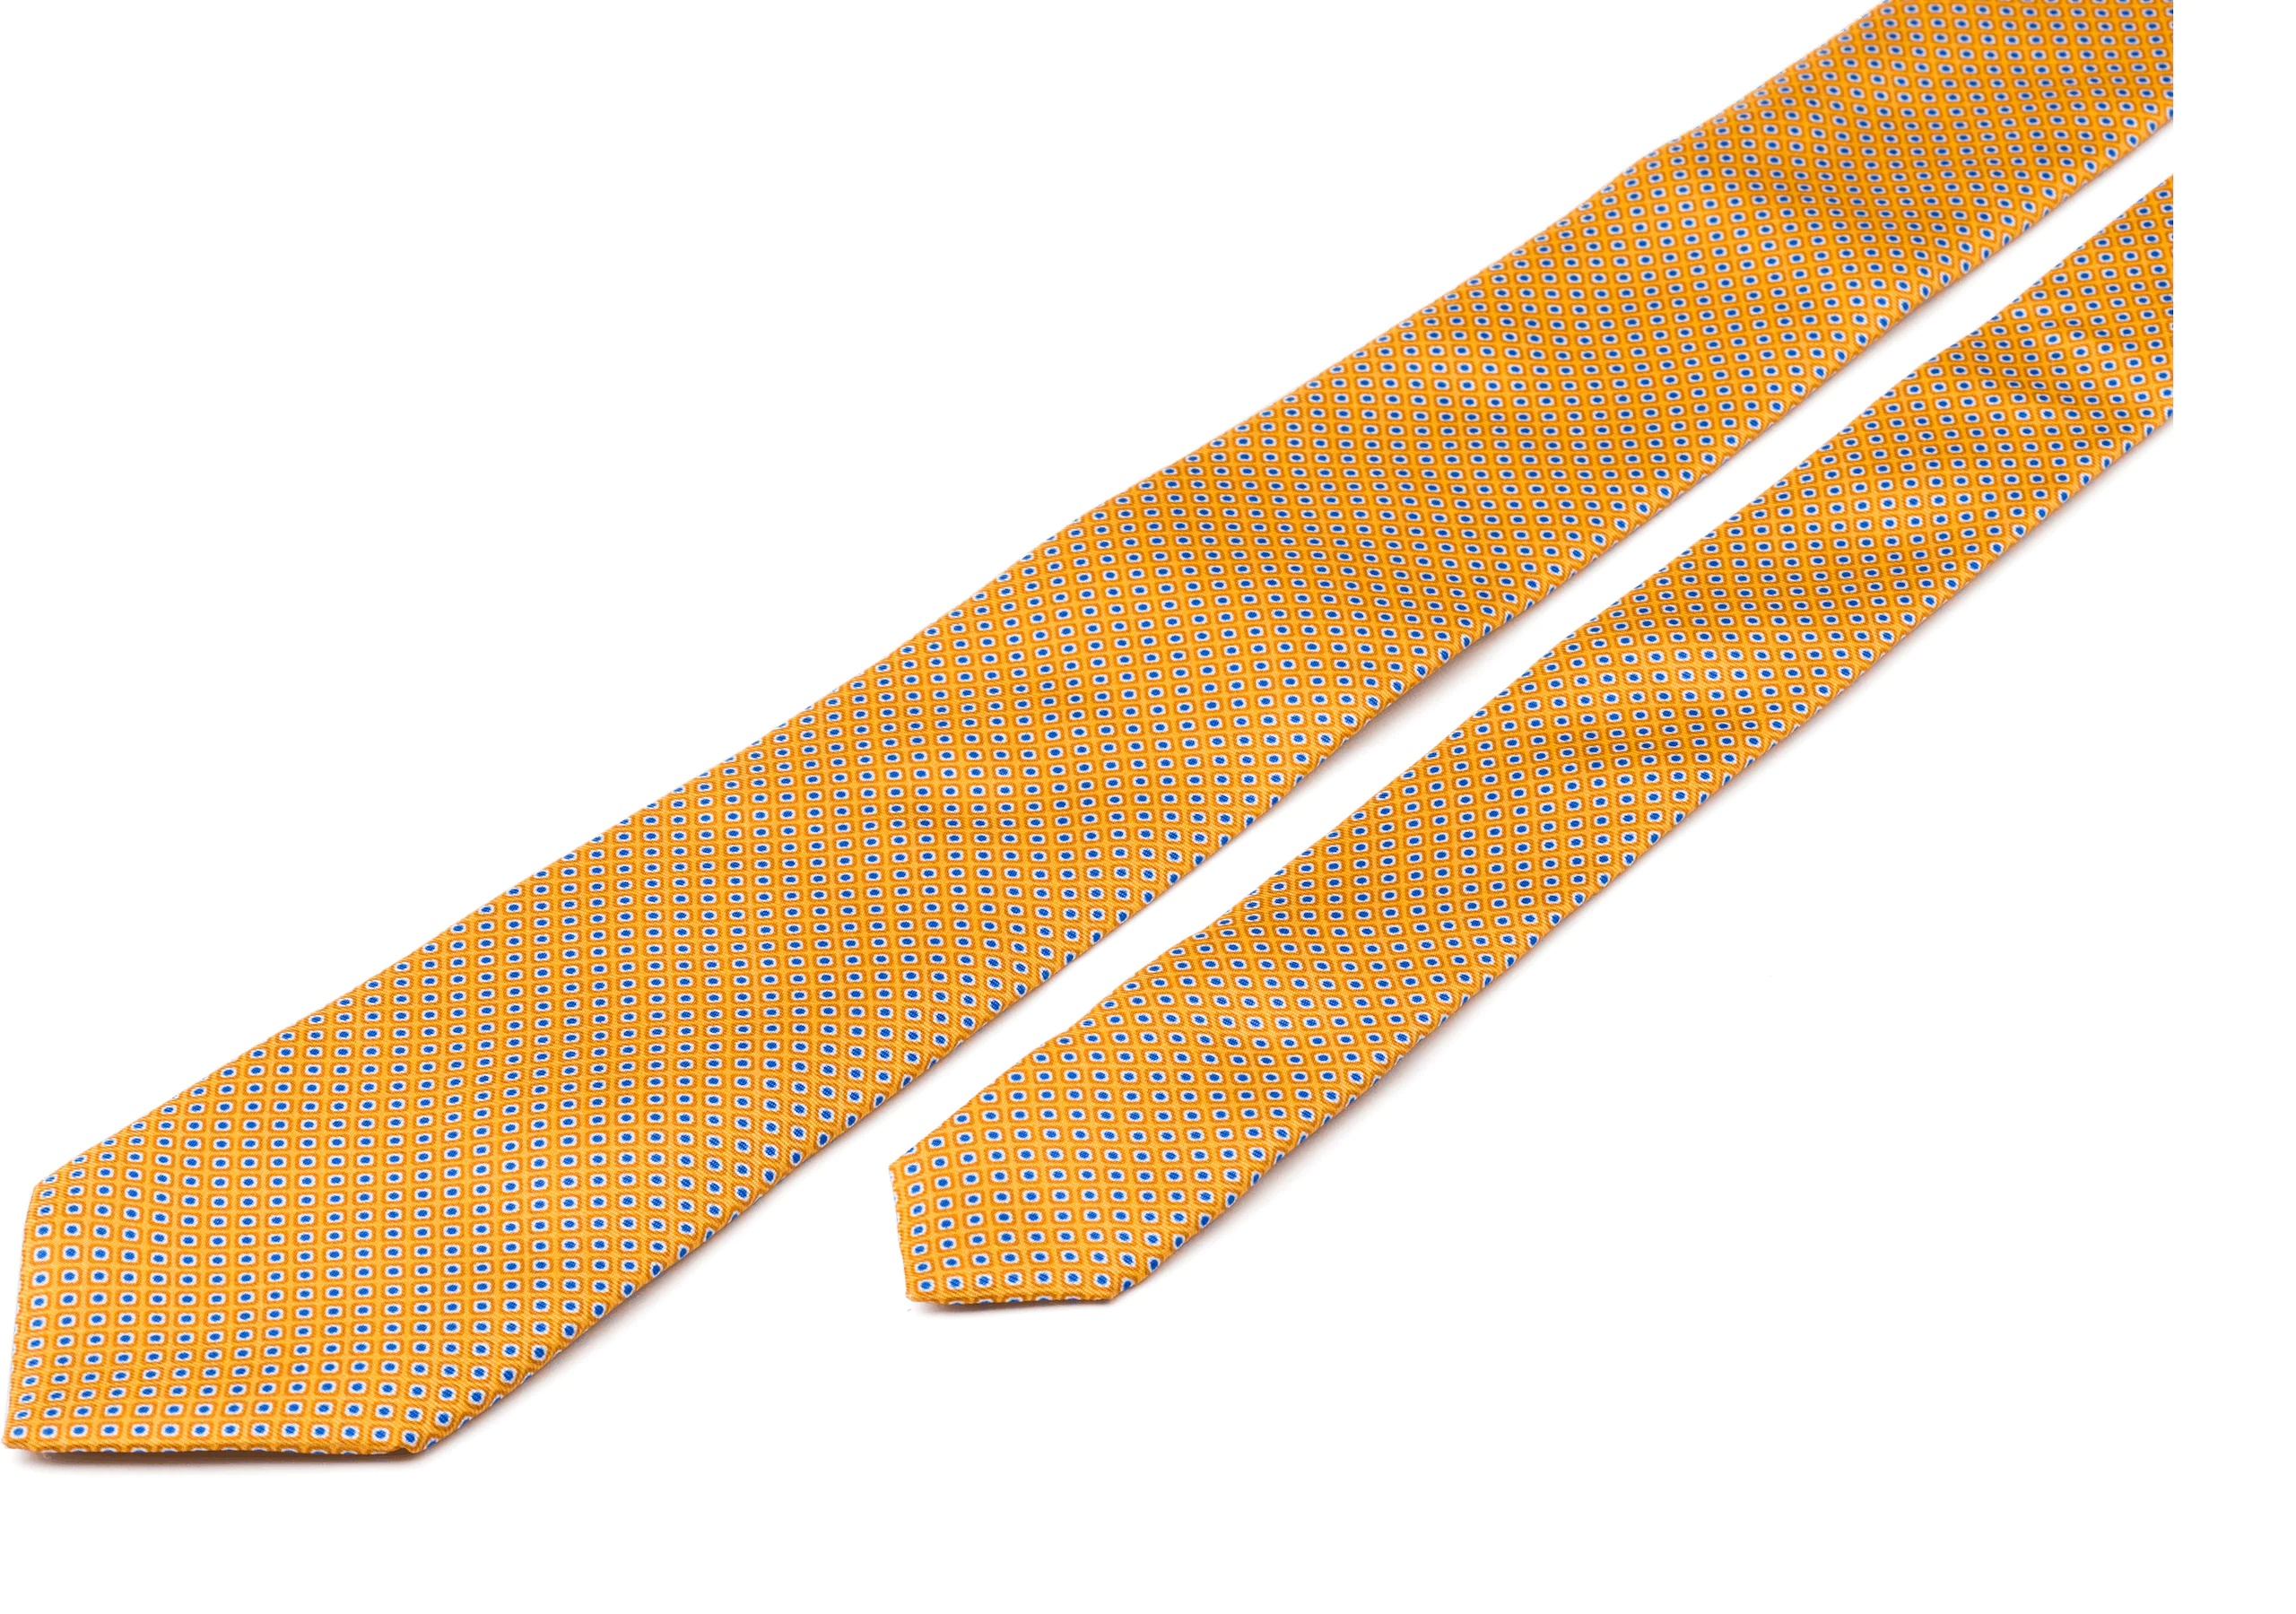 Rhombus print tie
Printed Silk Twill Multicolored - 2